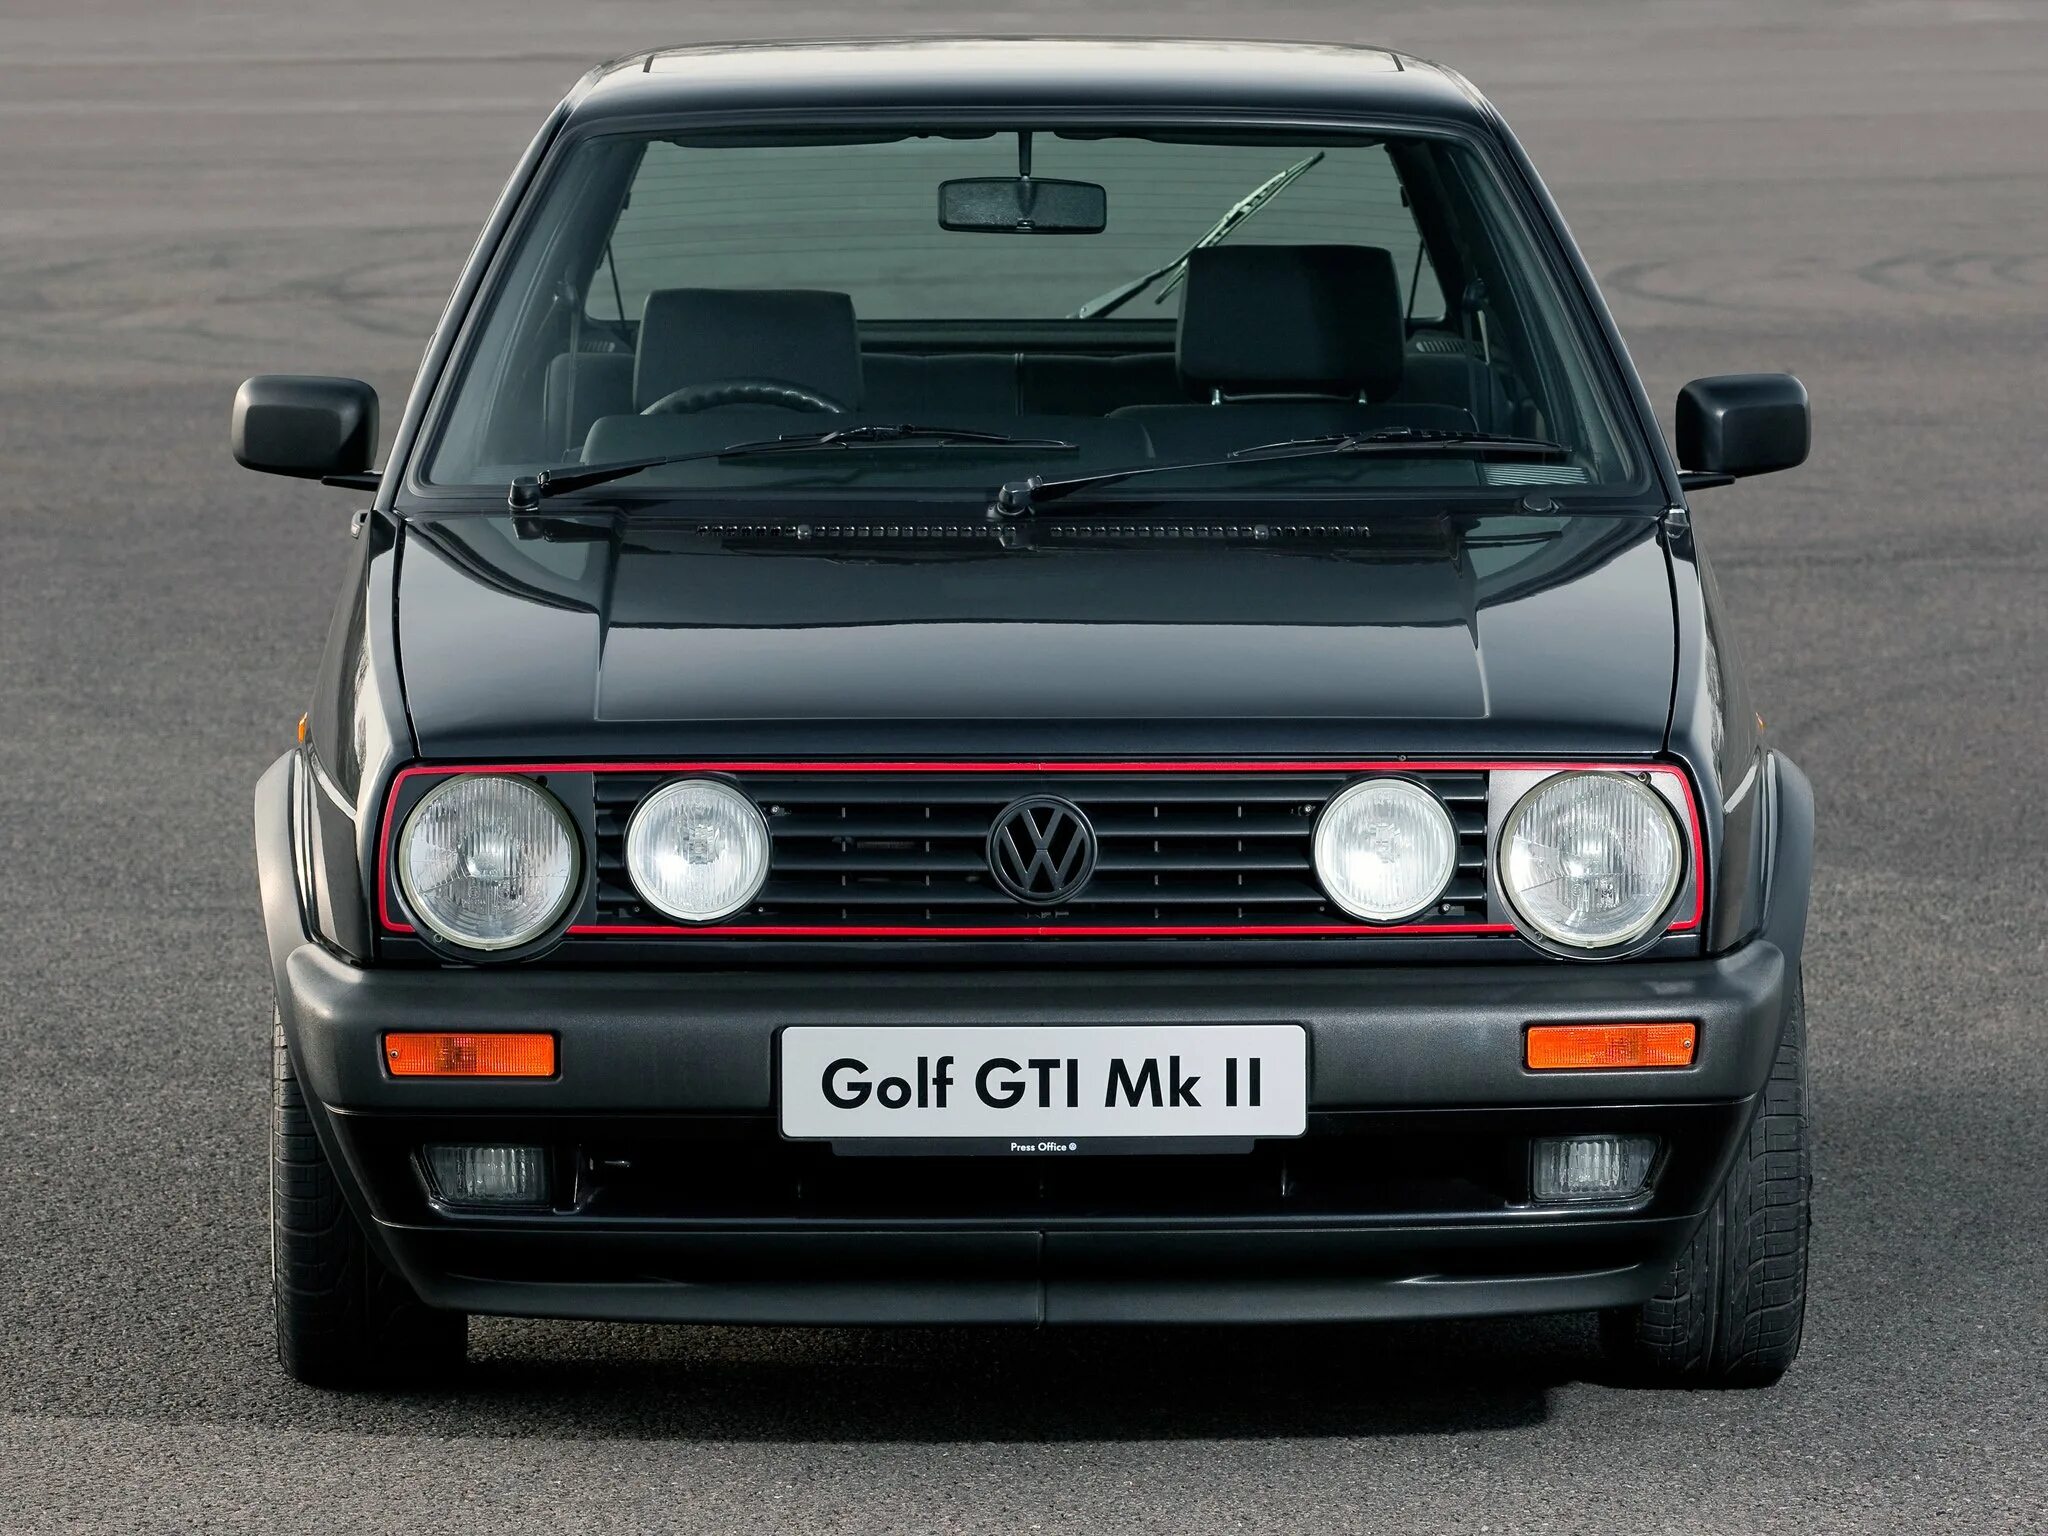 Volkswagen mk. Volkswagen Golf GTI mk2. VW Golf 2 GTI. VW Golf mk2 GTI. Volkswagen Golf GTI MK II.